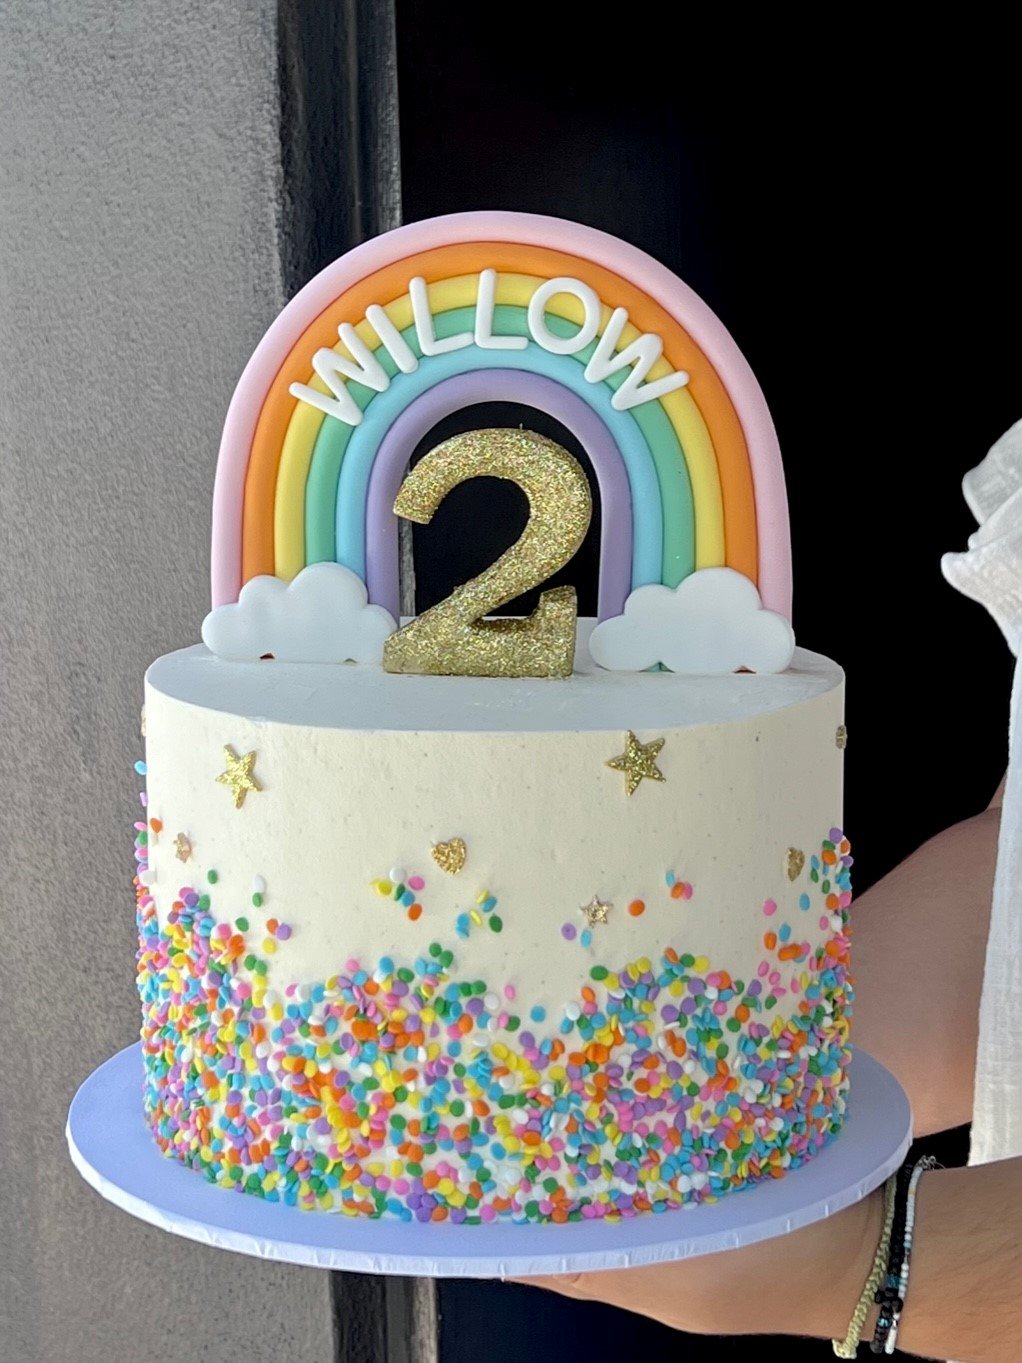 vanillapodspecialtycakes-noveltycakes-brisbanecakes-birthdaycakebrisbane-kidscakes-rainbowcake-sprinklecake-2ndbirthdaycake.jpg